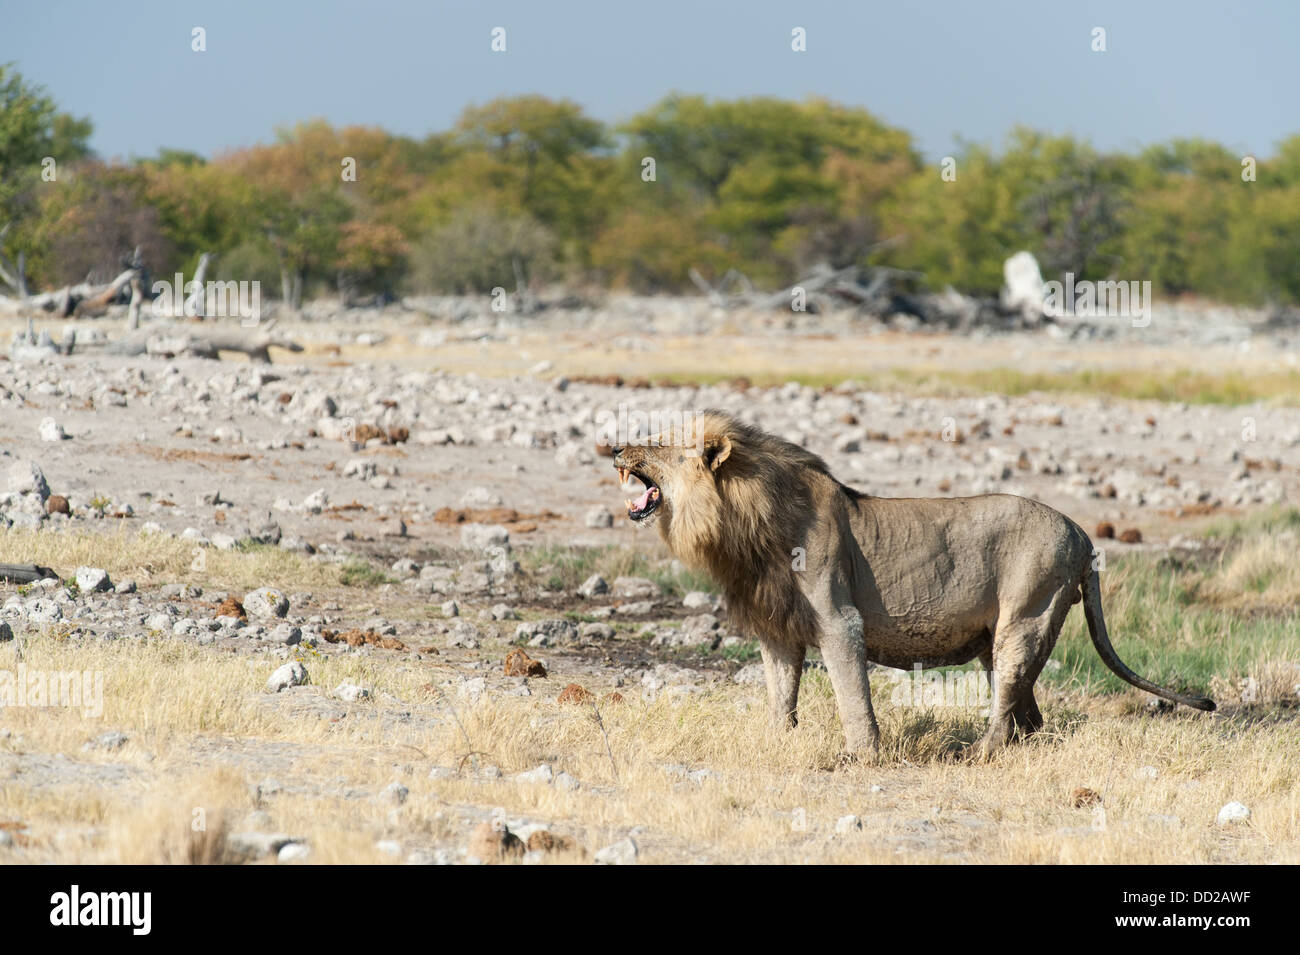 Leone maschio (Panthera leo) sniffing l'aria, che mostra il comportamento flehmen, Etosha Nationalpark, Namibia Foto Stock